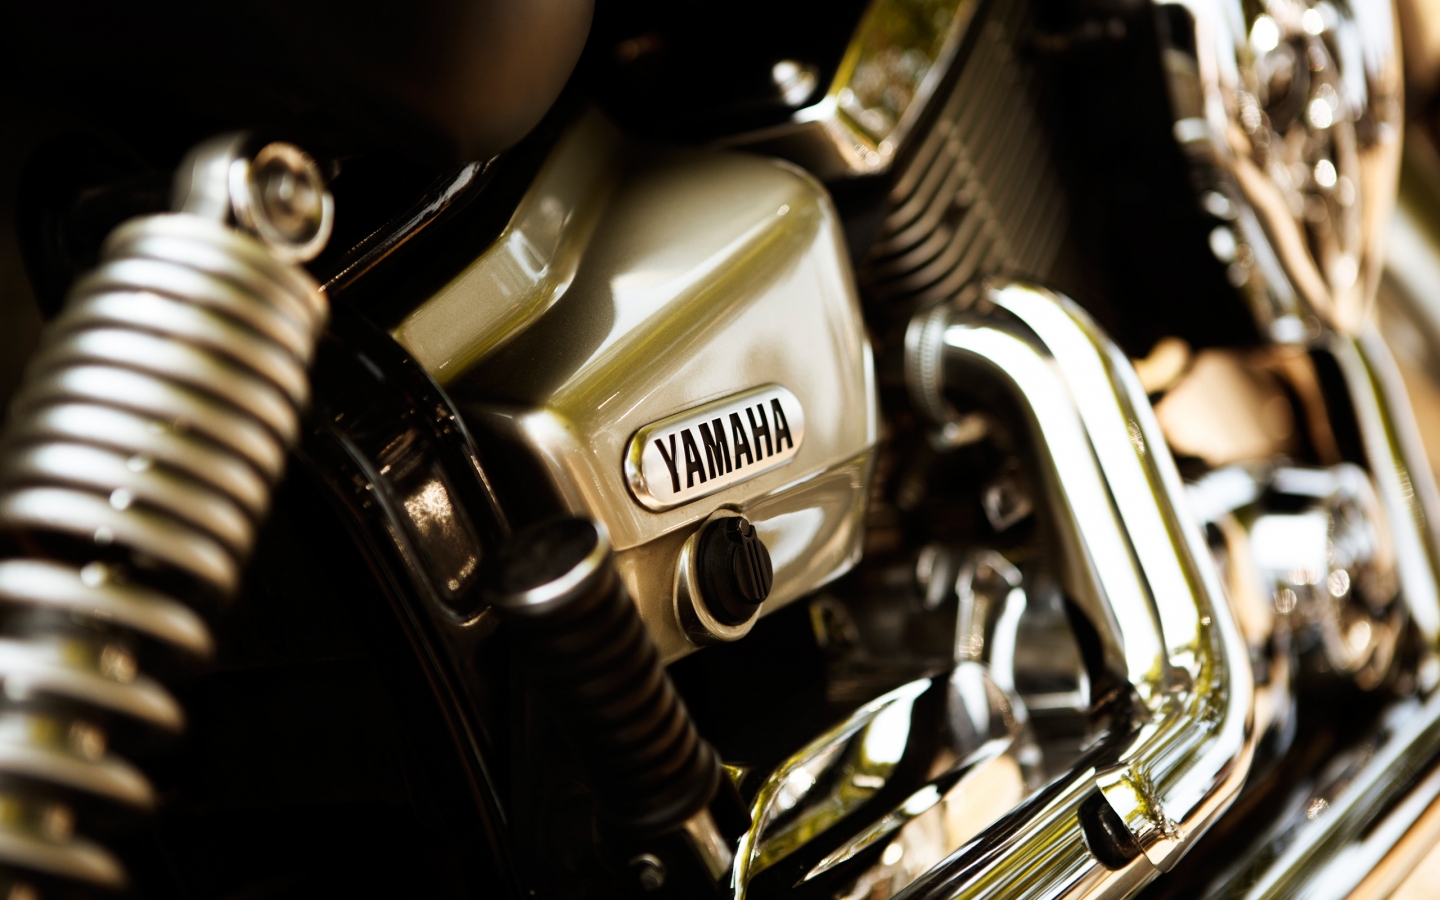 Yamaha bike Close-Up for 1440 x 900 widescreen resolution